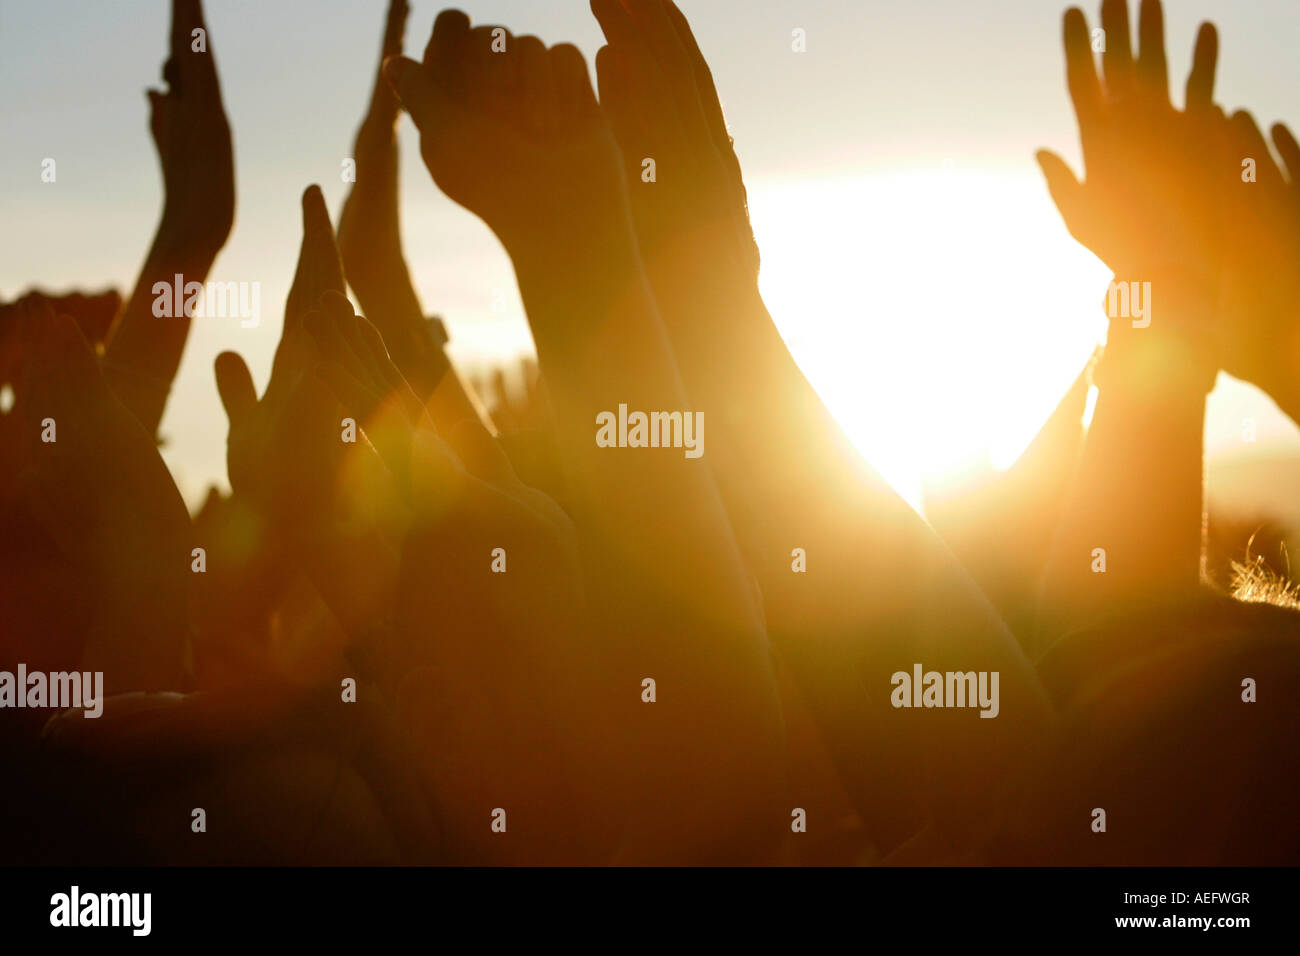 sun setting at open air concert through fans waving their arms in the air Stock Photo